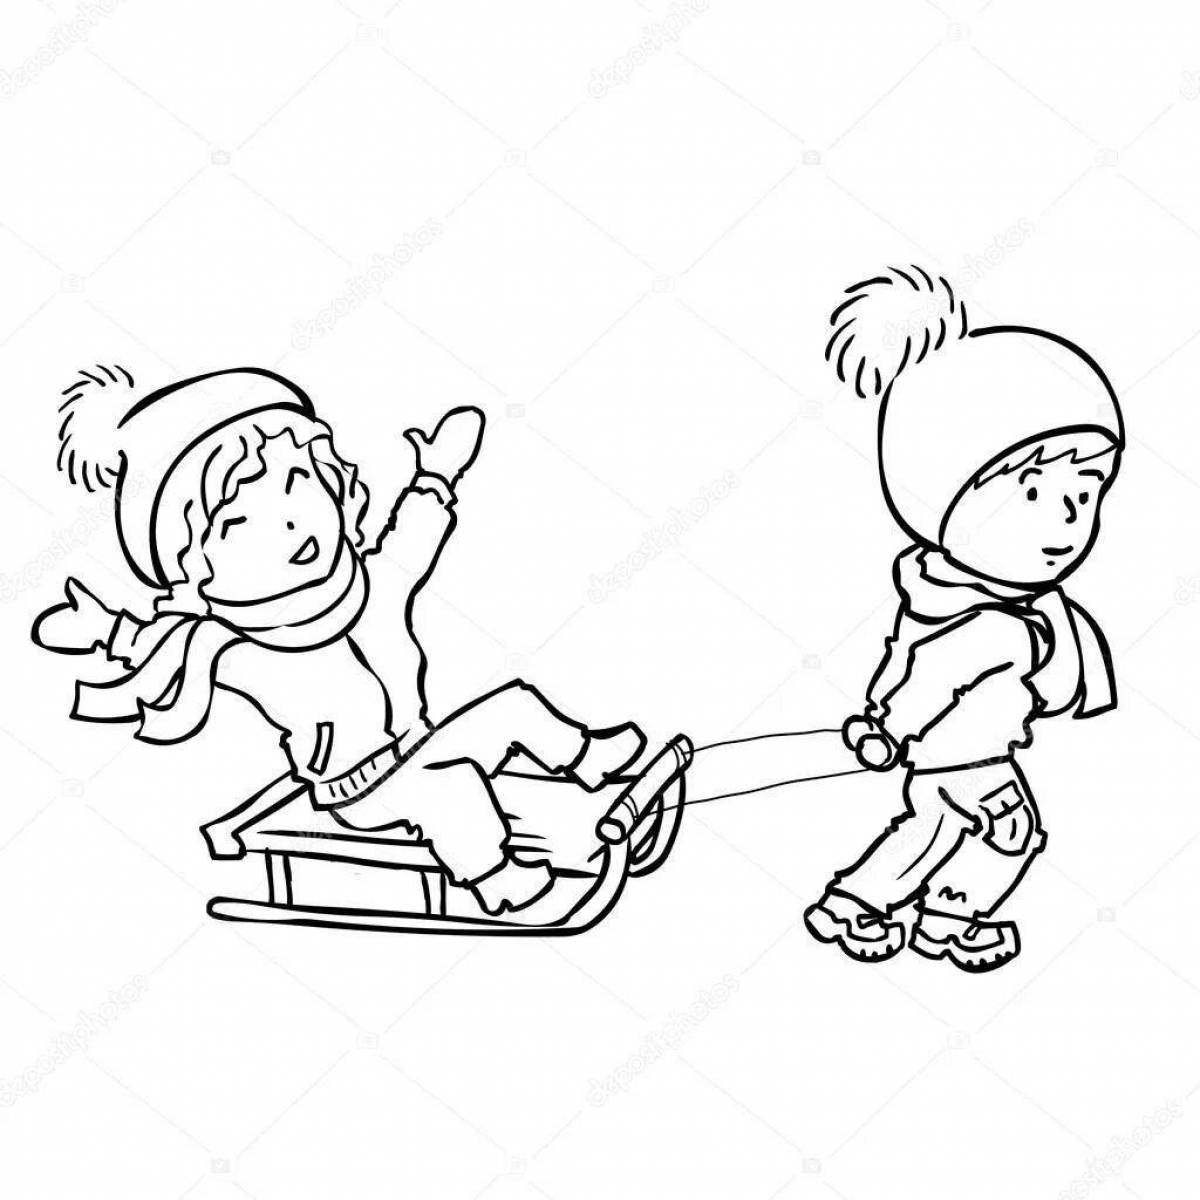 Violent children sledding down the mountain